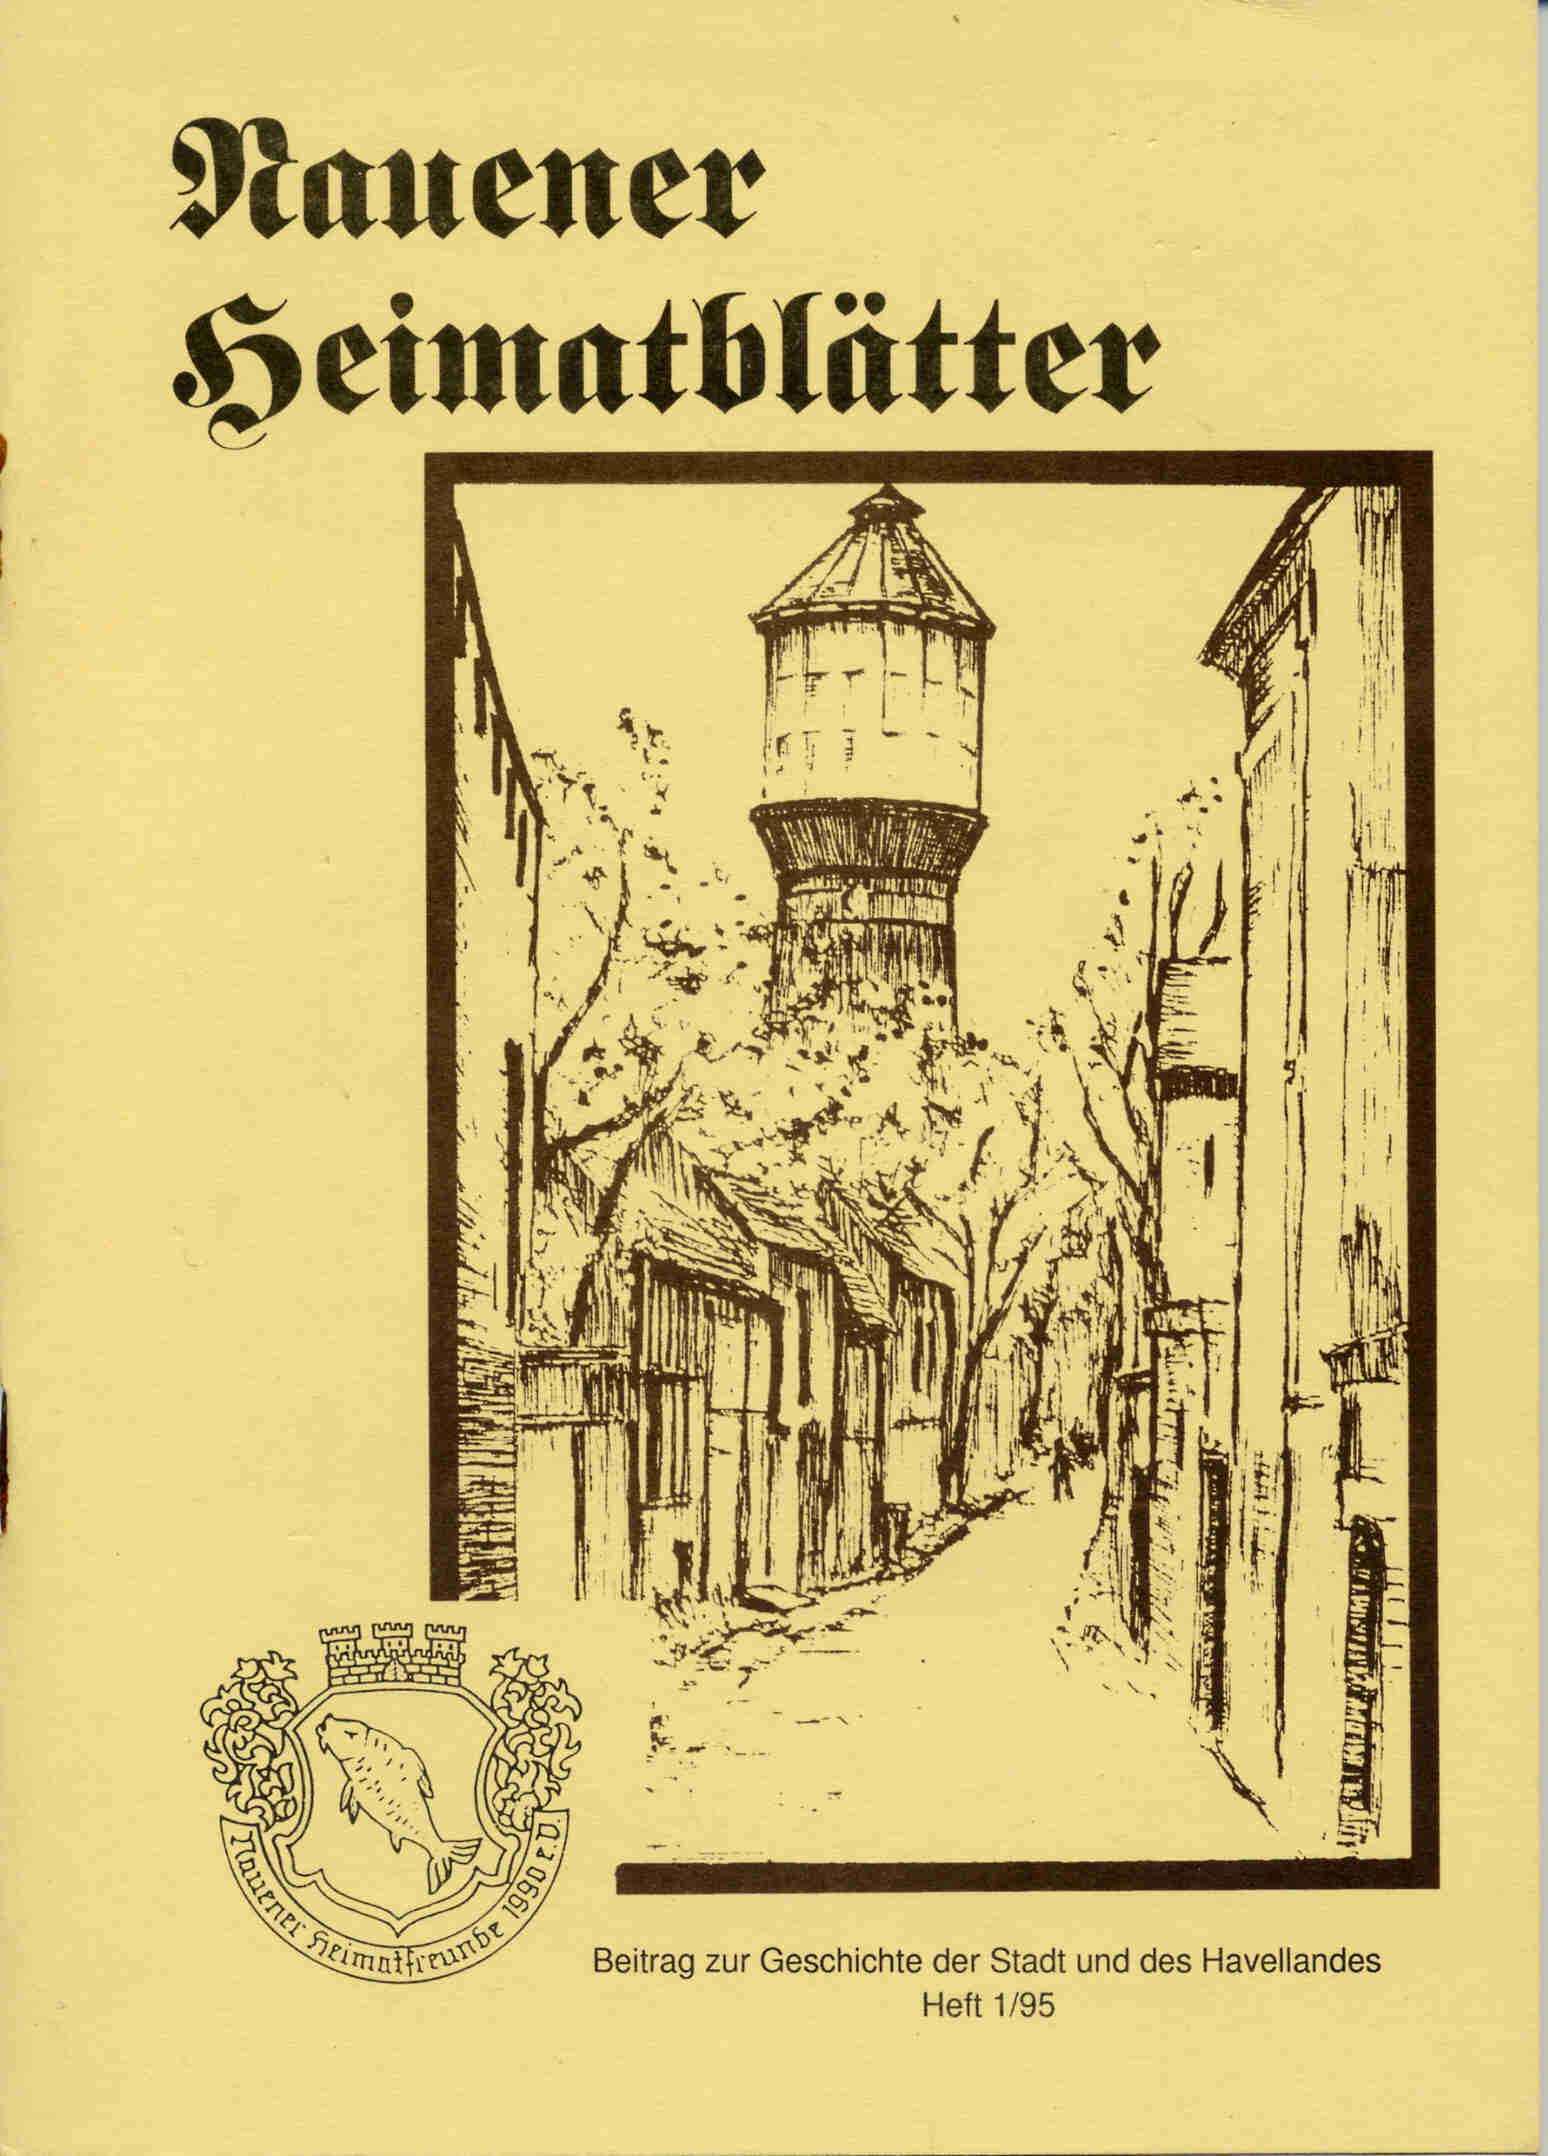 1995 Nauener Heimatbltter Heft 2